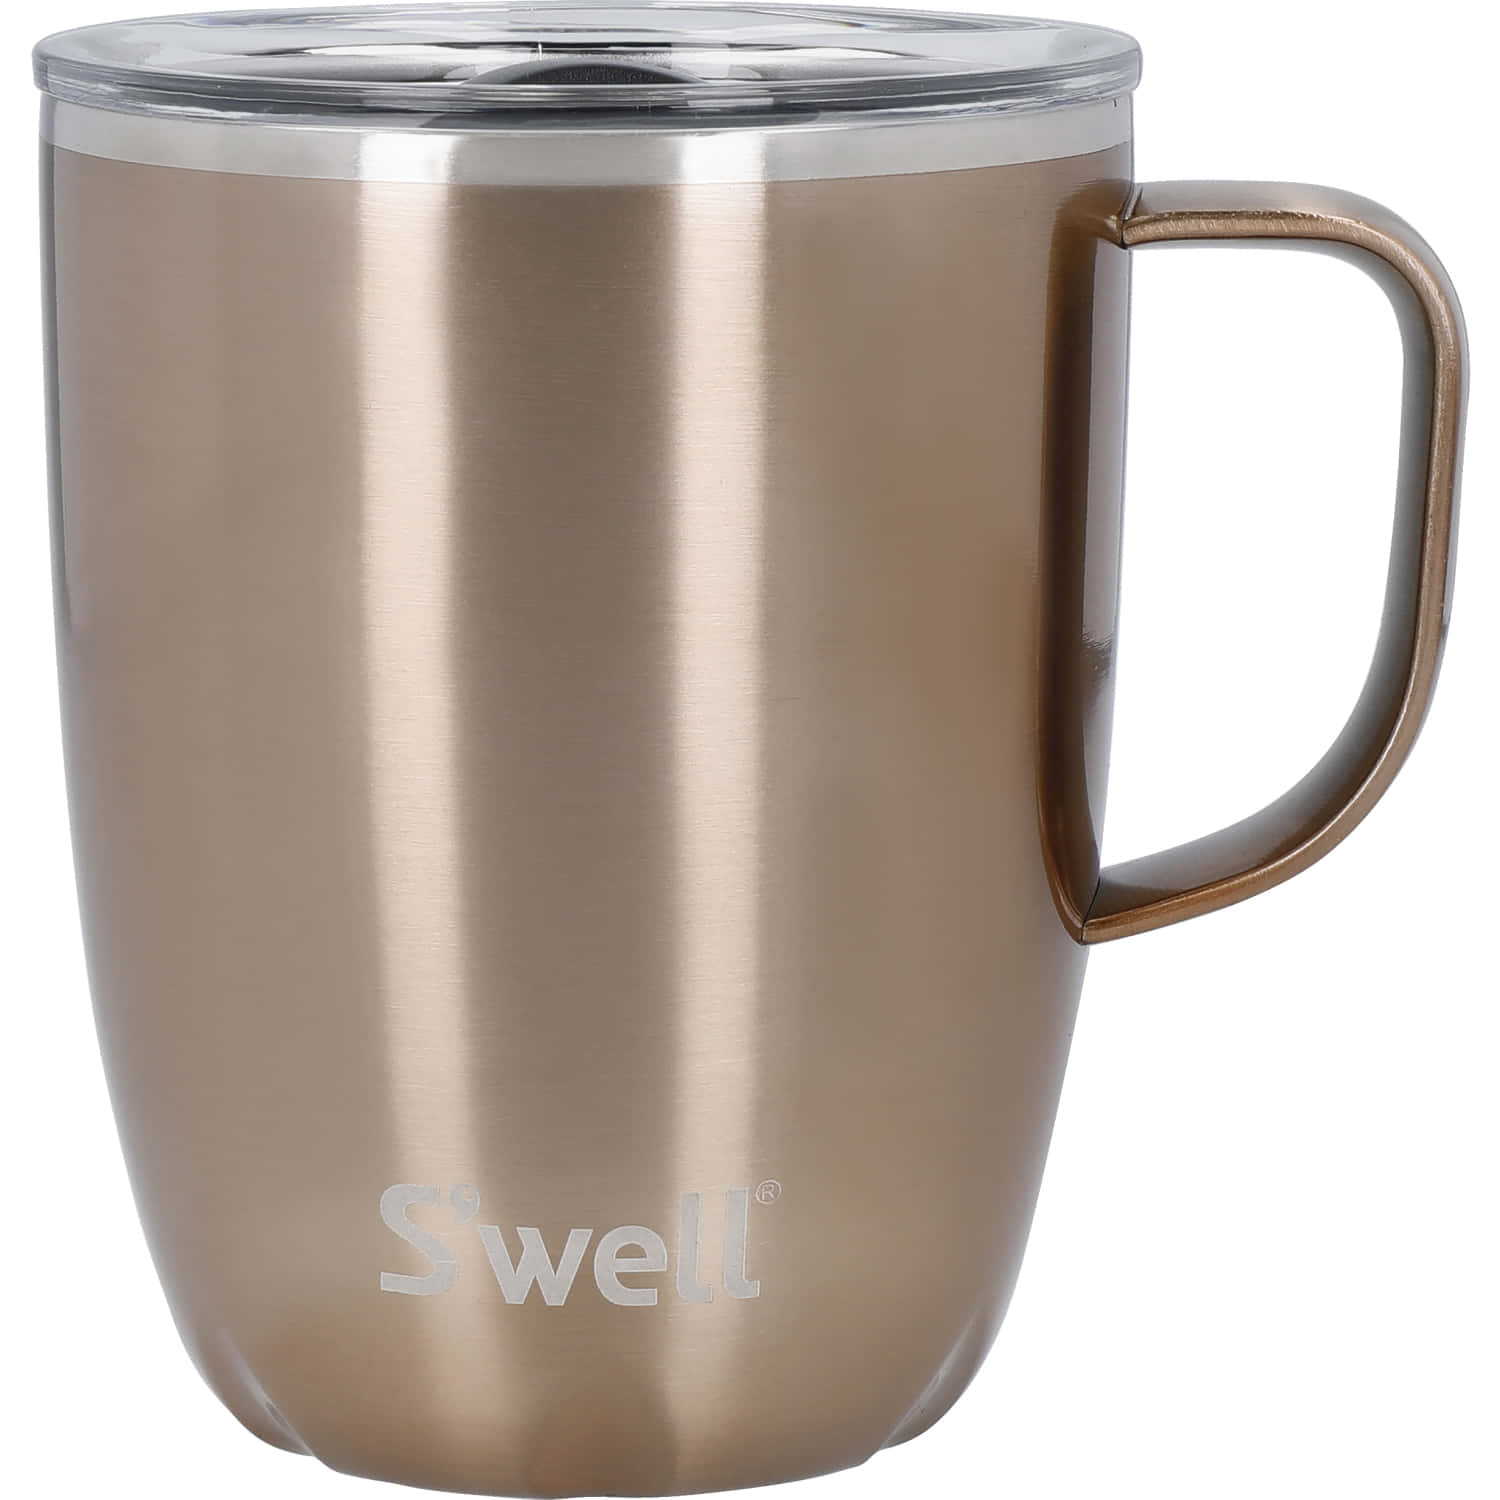 S'well Pyrite - Mug 350ml